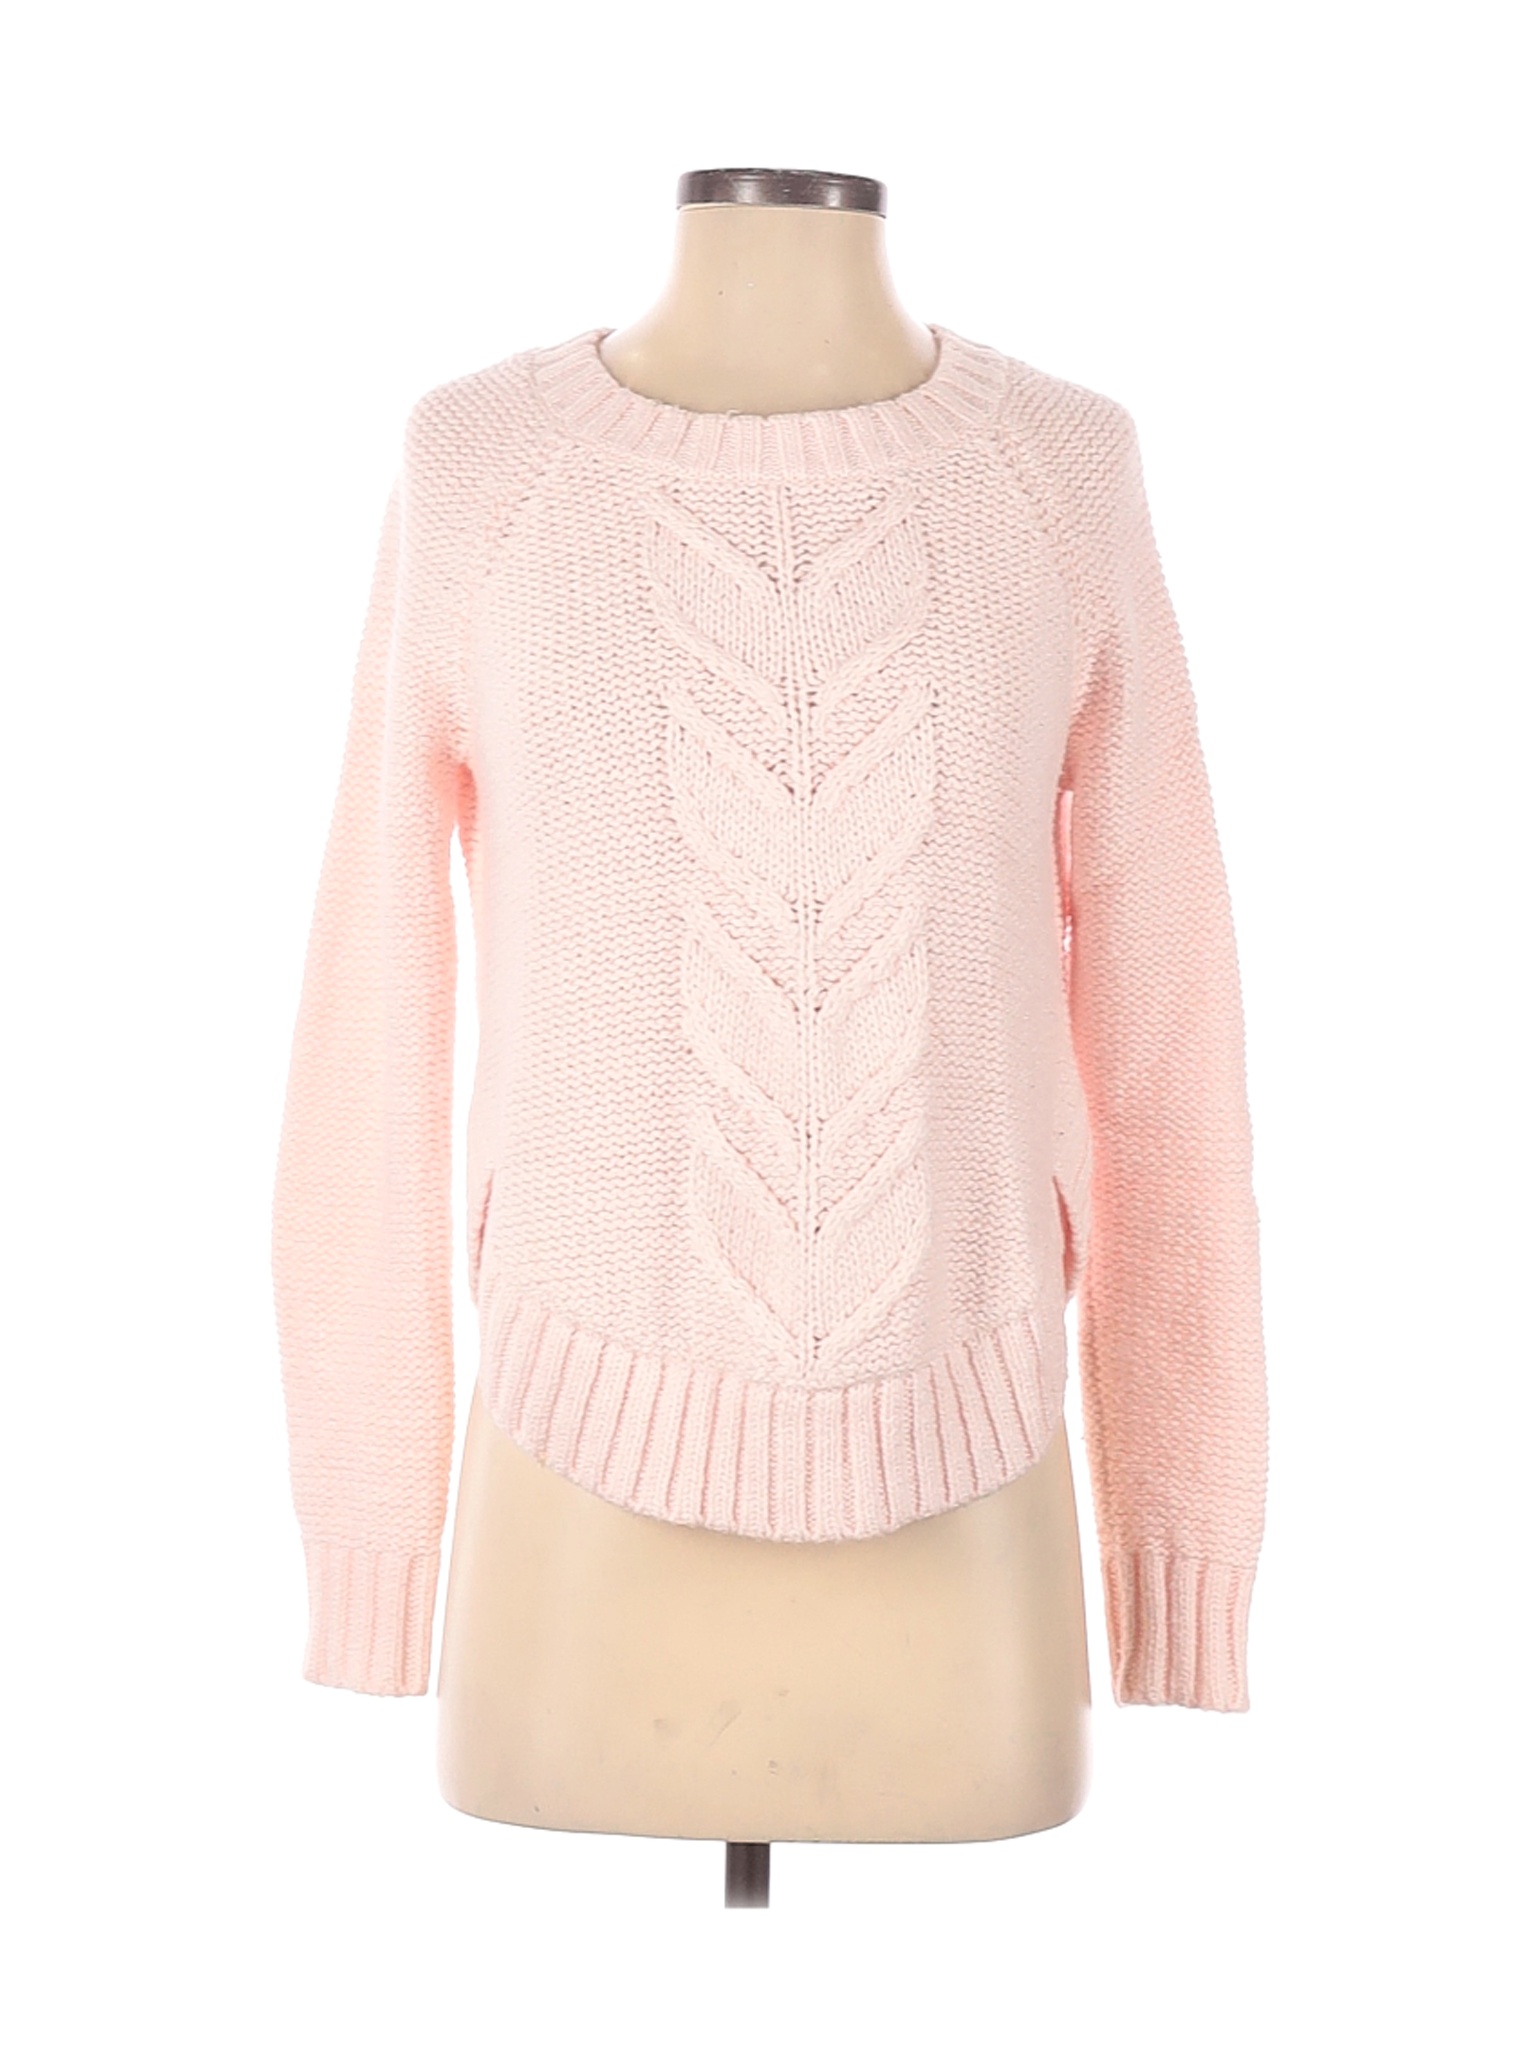 Aerie Women Pink Pullover Sweater S | eBay